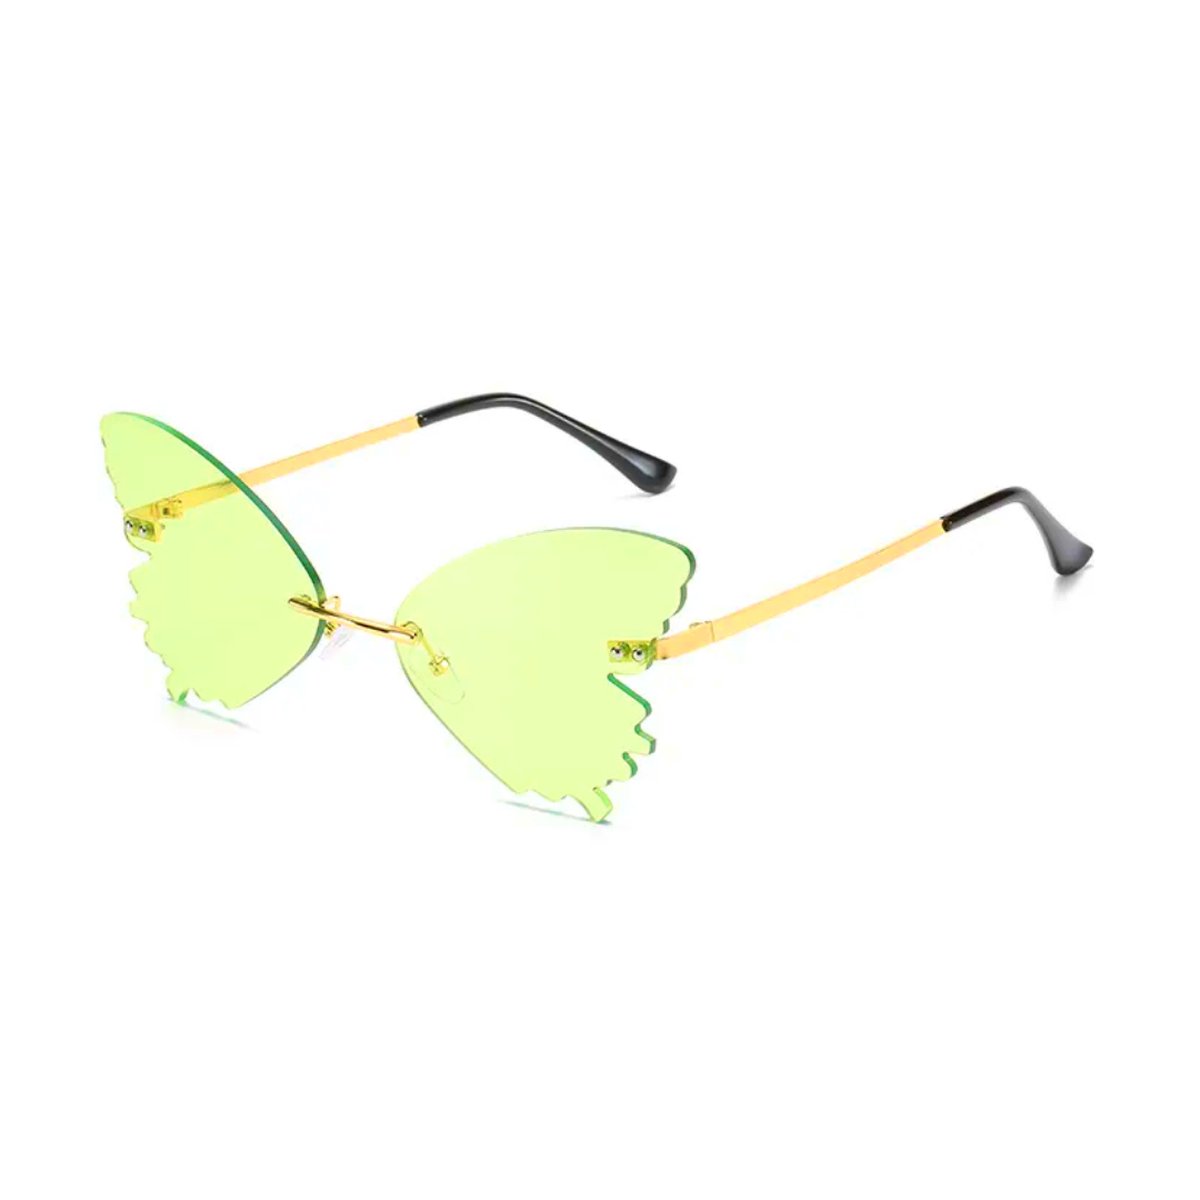 Vlinder zonnebril - Groen - festivalbril / hippie bril / technobril / rave bril / butterfly glasses / retro zonnebril / carnaval bril / accessoires / feest bril / gekke bril / verkleed bril